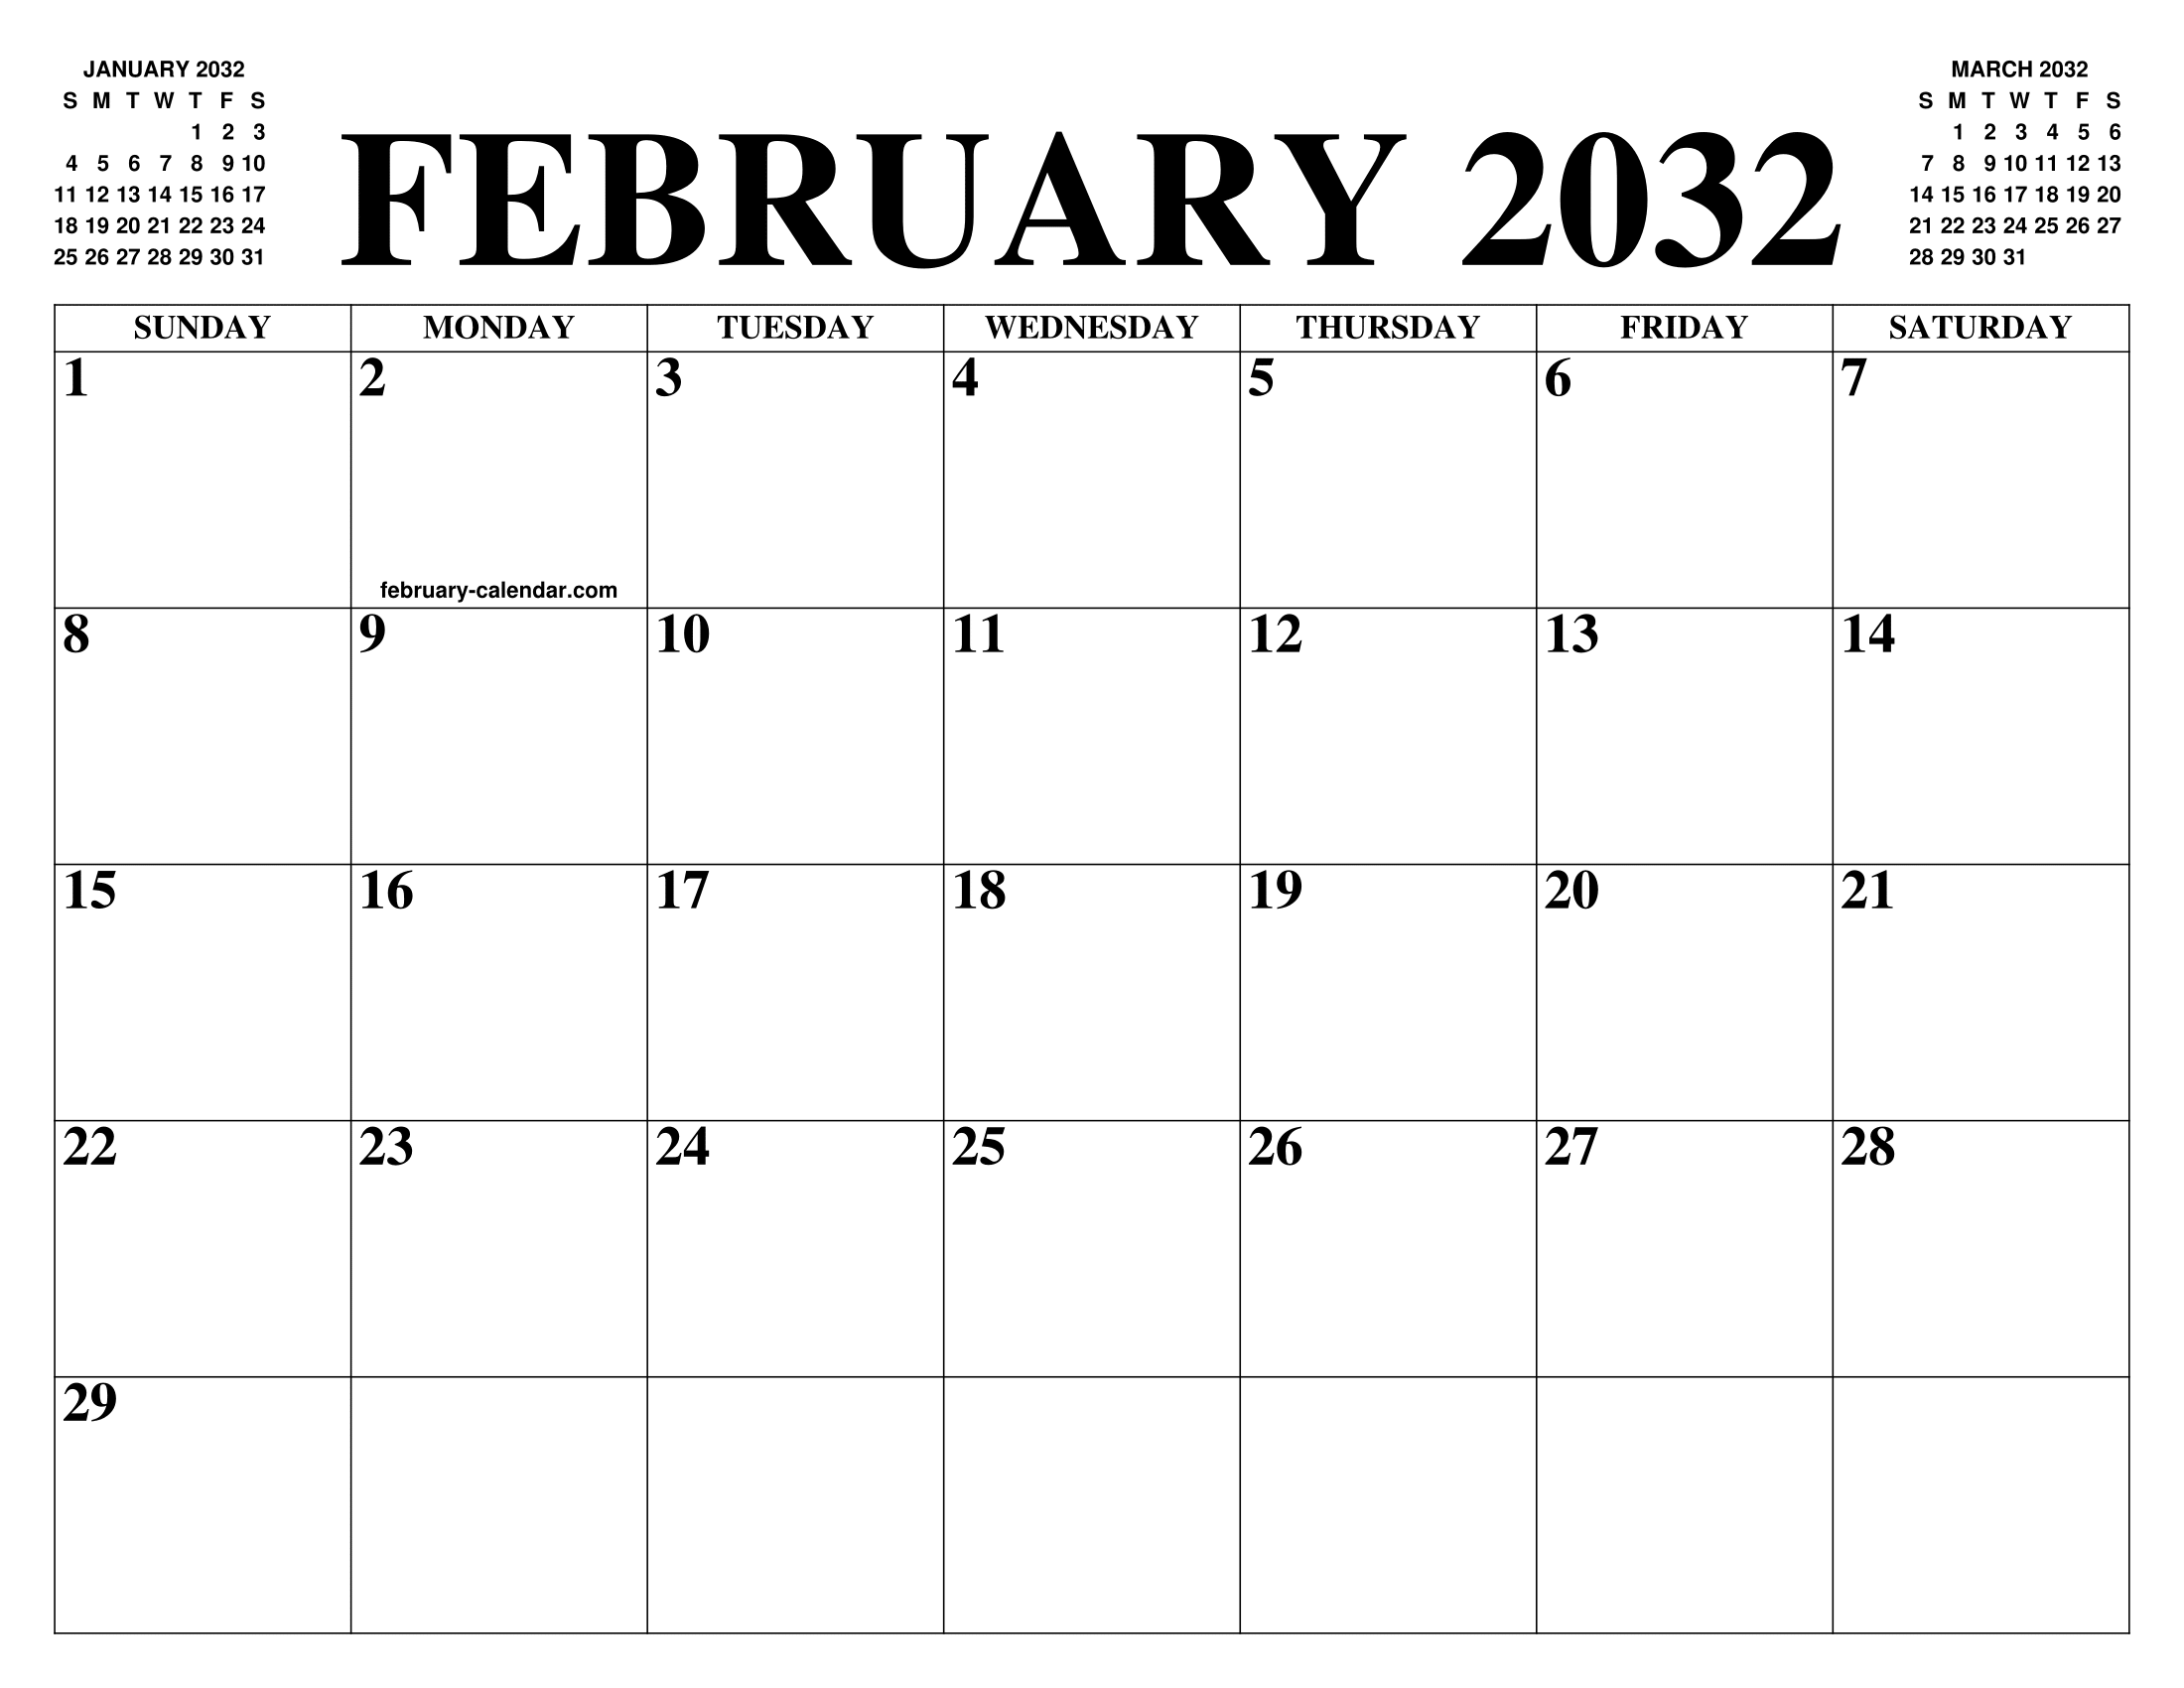 FEBRUARY 2032 CALENDAR OF THE MONTH: FREE PRINTABLE FEBRUARY CALENDAR